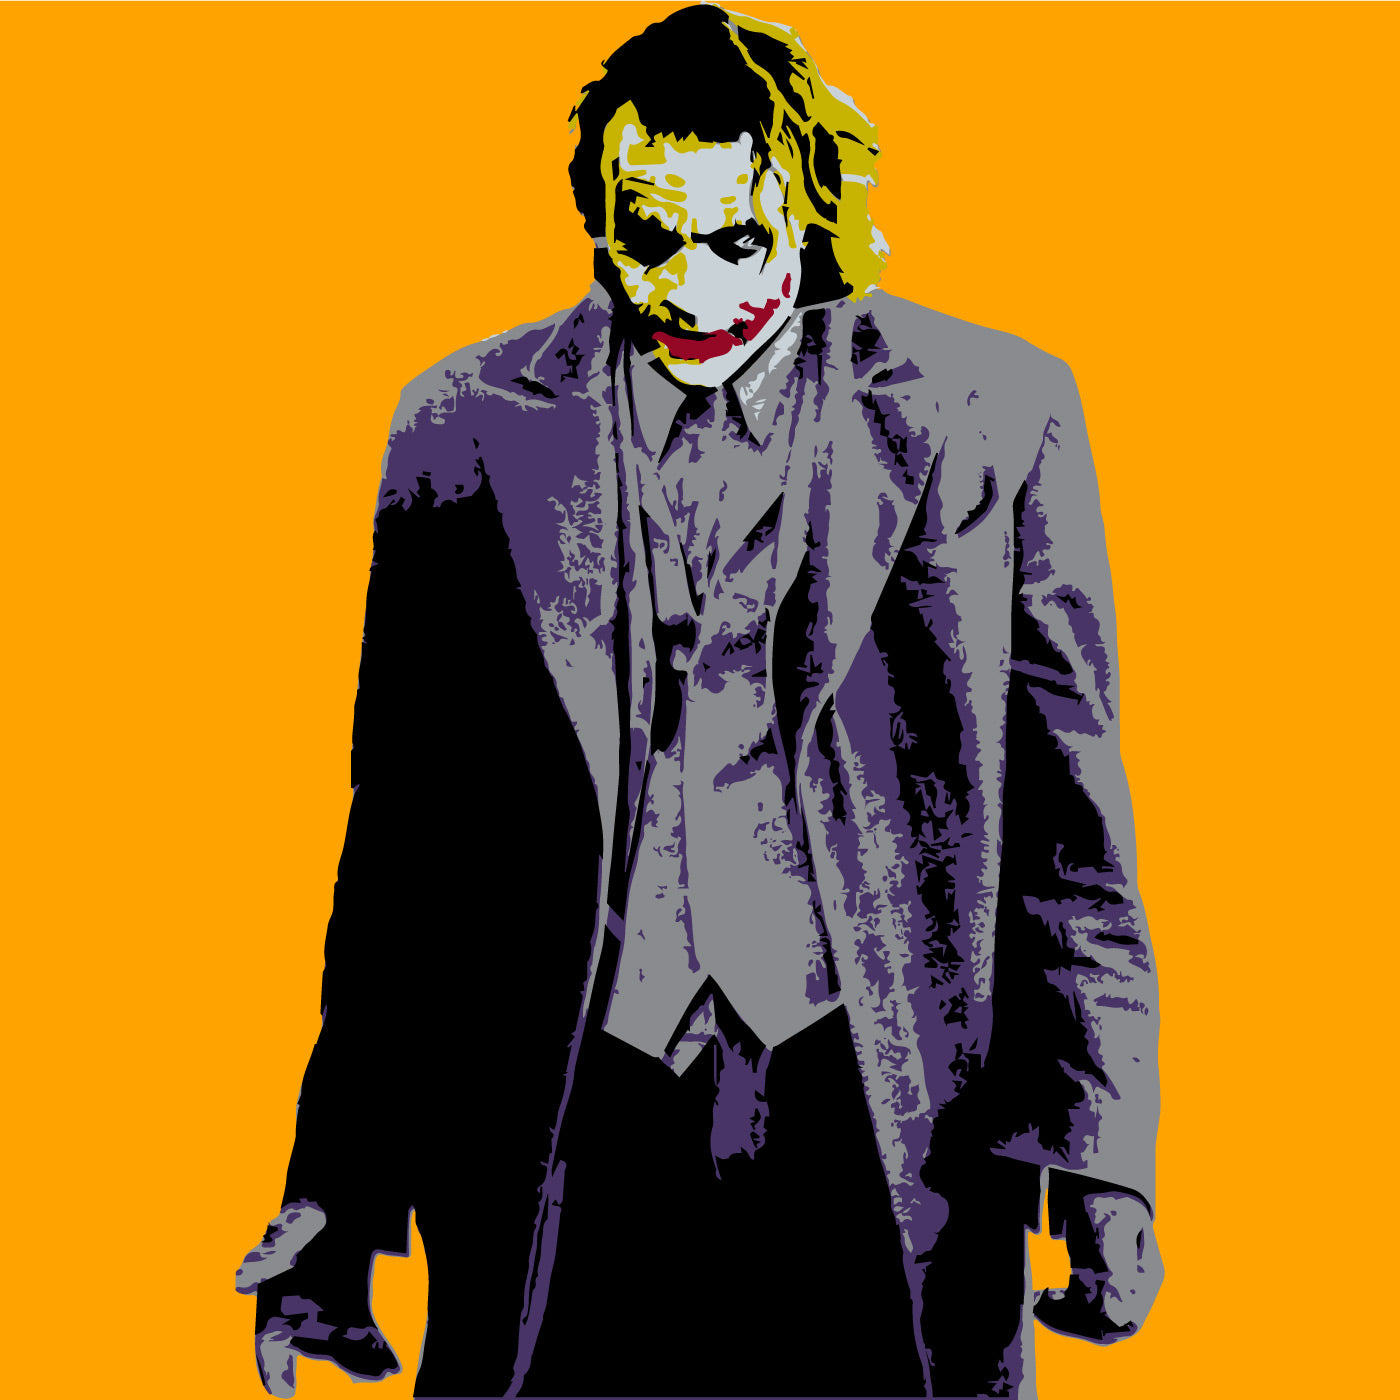 The Joker "Heath Ledger" Layered Stencil Set